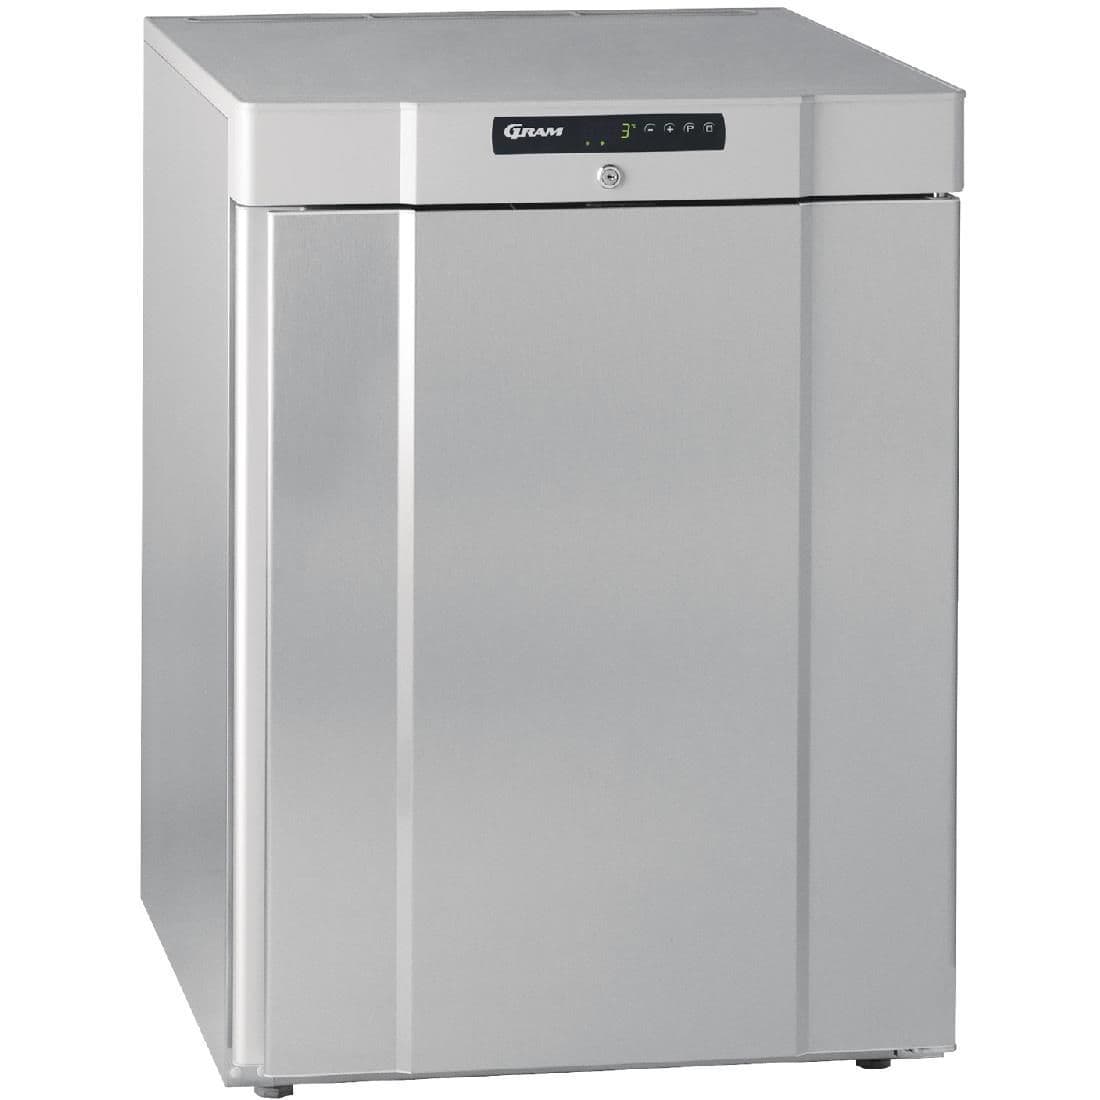 Gram Compact 1 Door 125Ltr Undercounter Freezer F210 RG 3N JD Catering Equipment Solutions Ltd